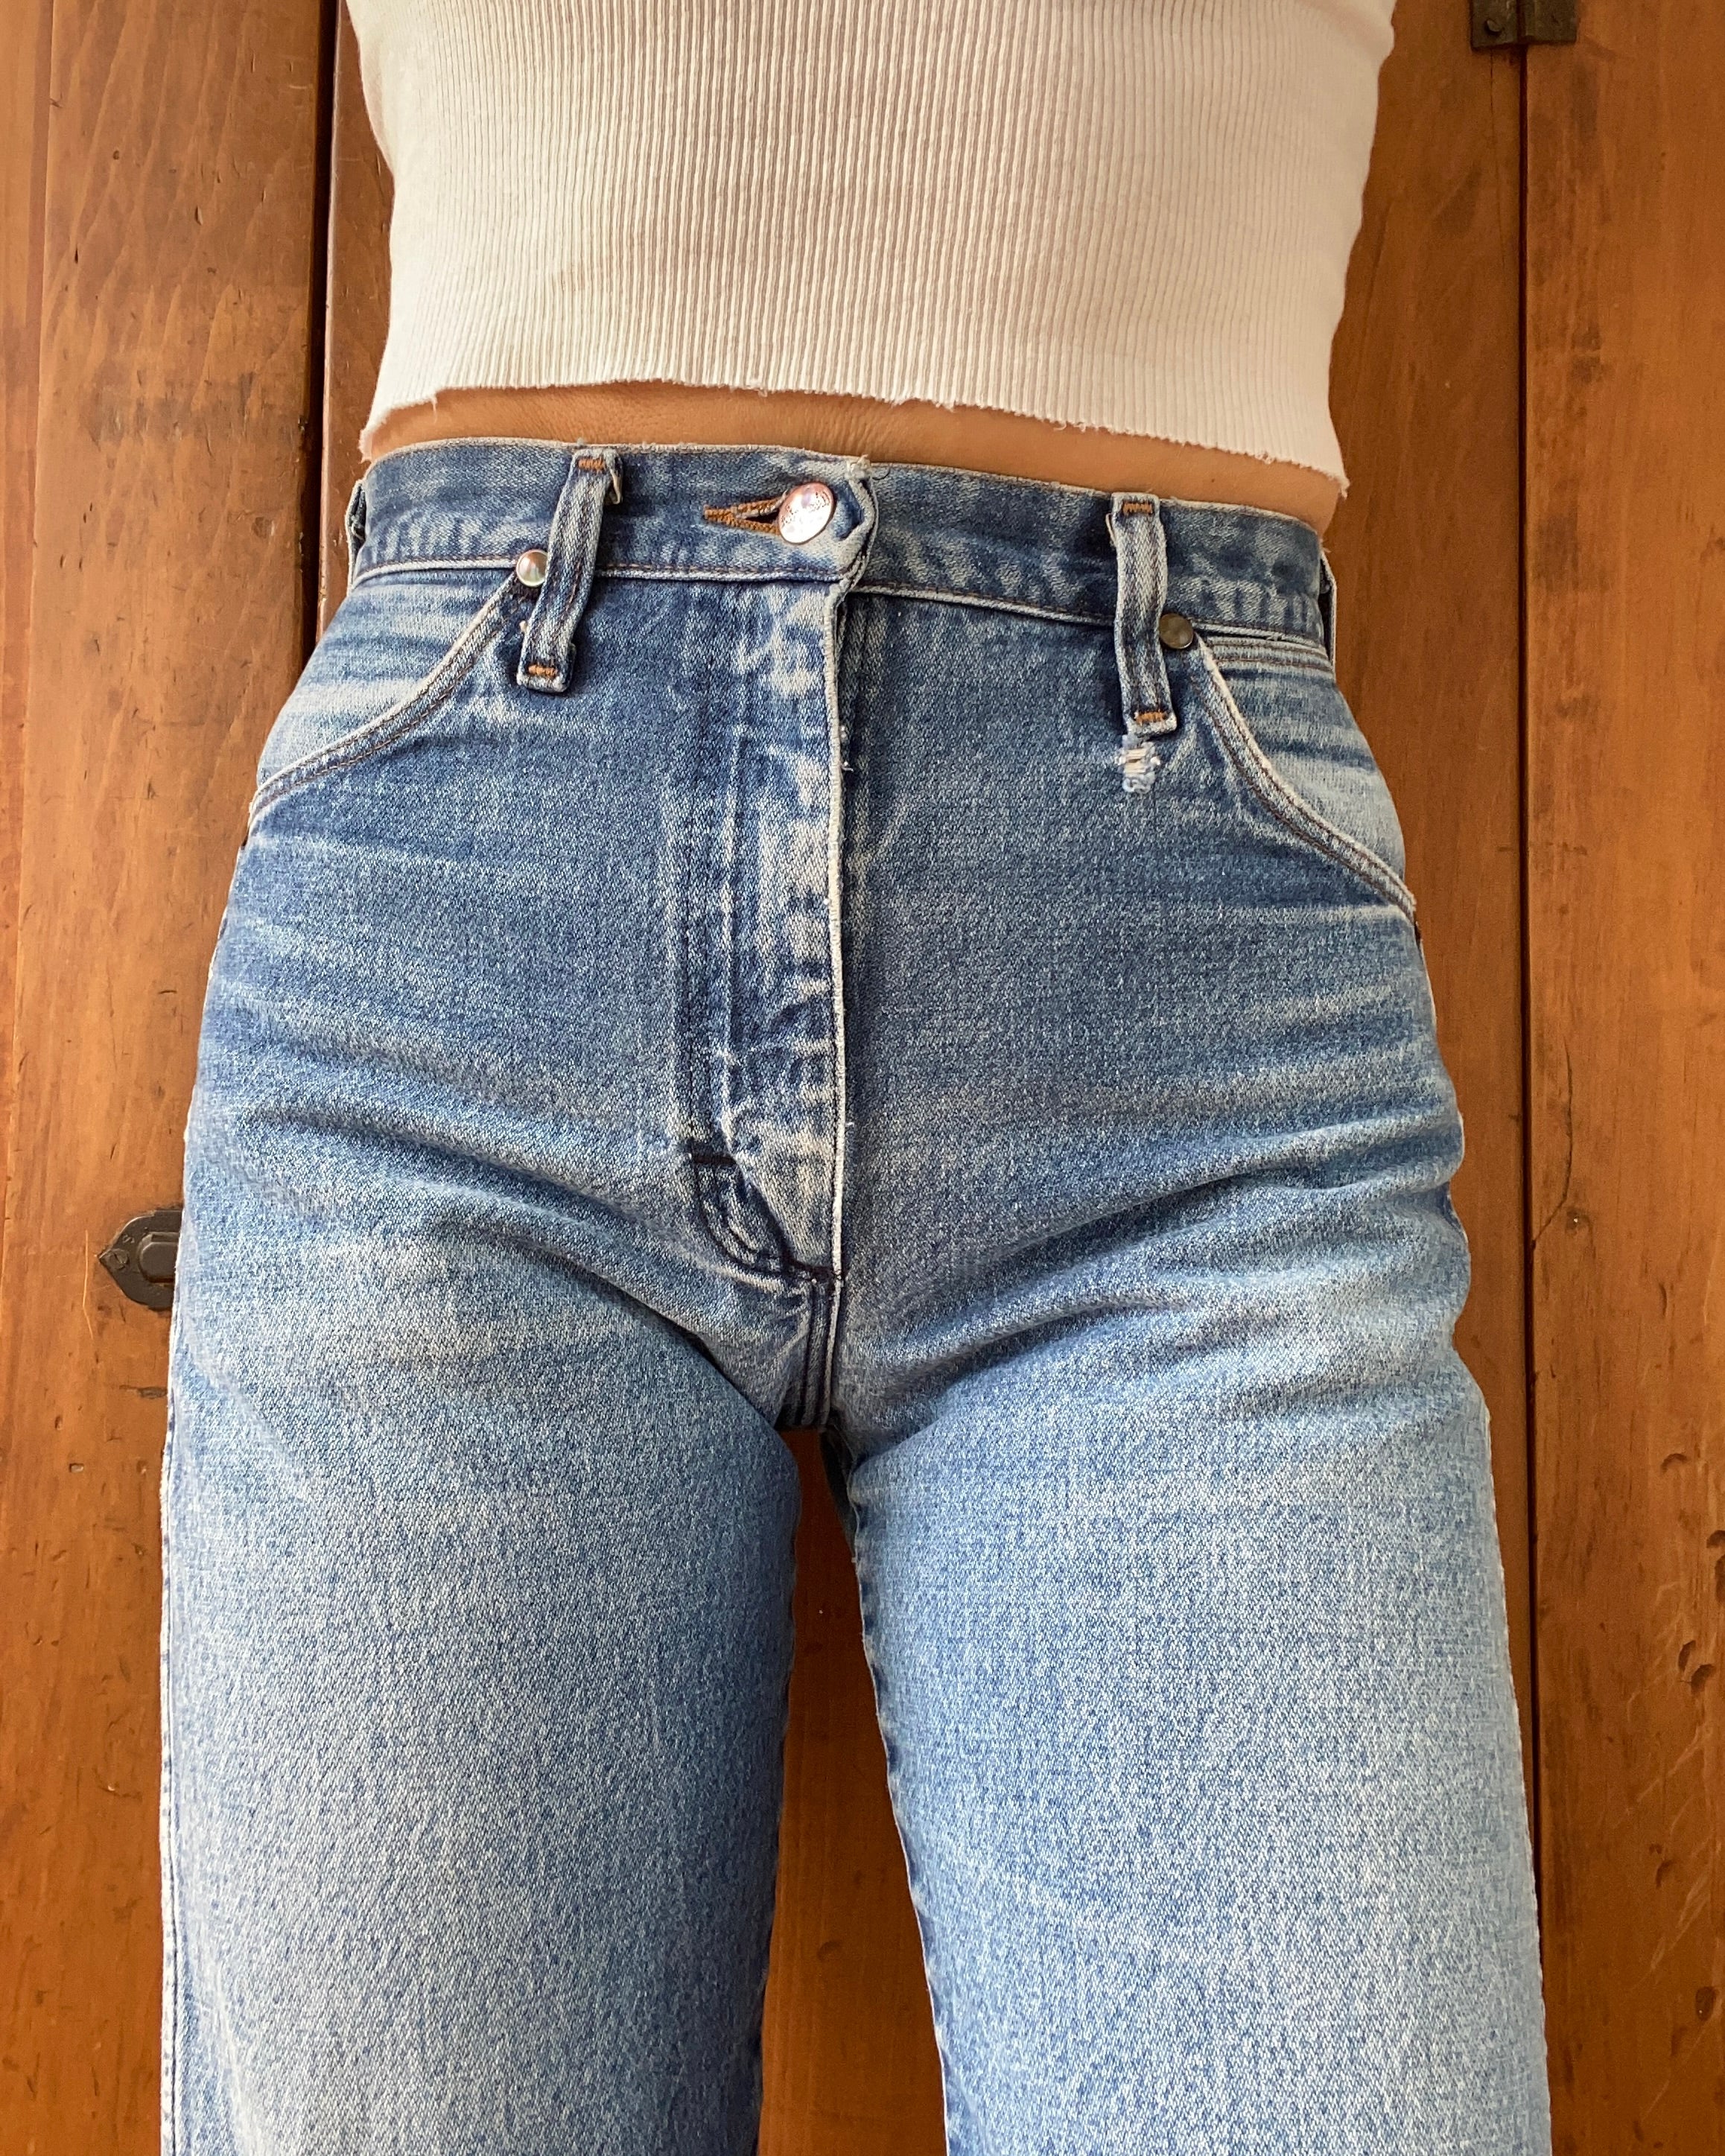 Vintage 1990s Wrangler Medium Wash Jeans size 28 to 29